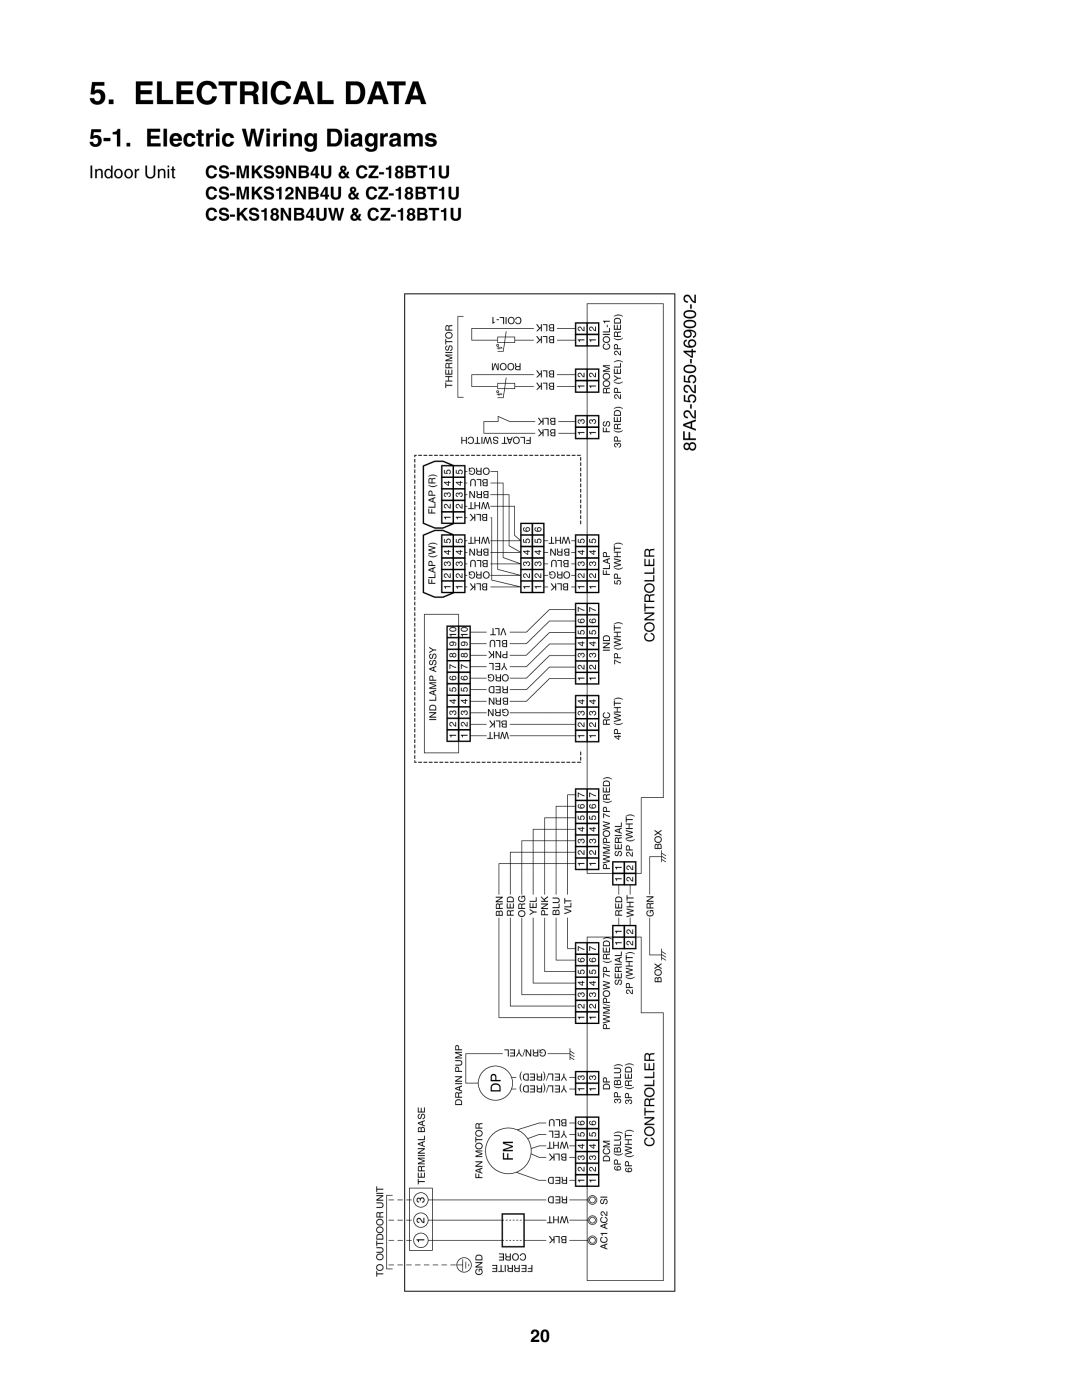 Panasonic R410A Electrical Data, Electric Wiring Diagrams, Indoor Unit CS-MKS9NB4U& CZ-18BT1U, Controller, Dp Fm 